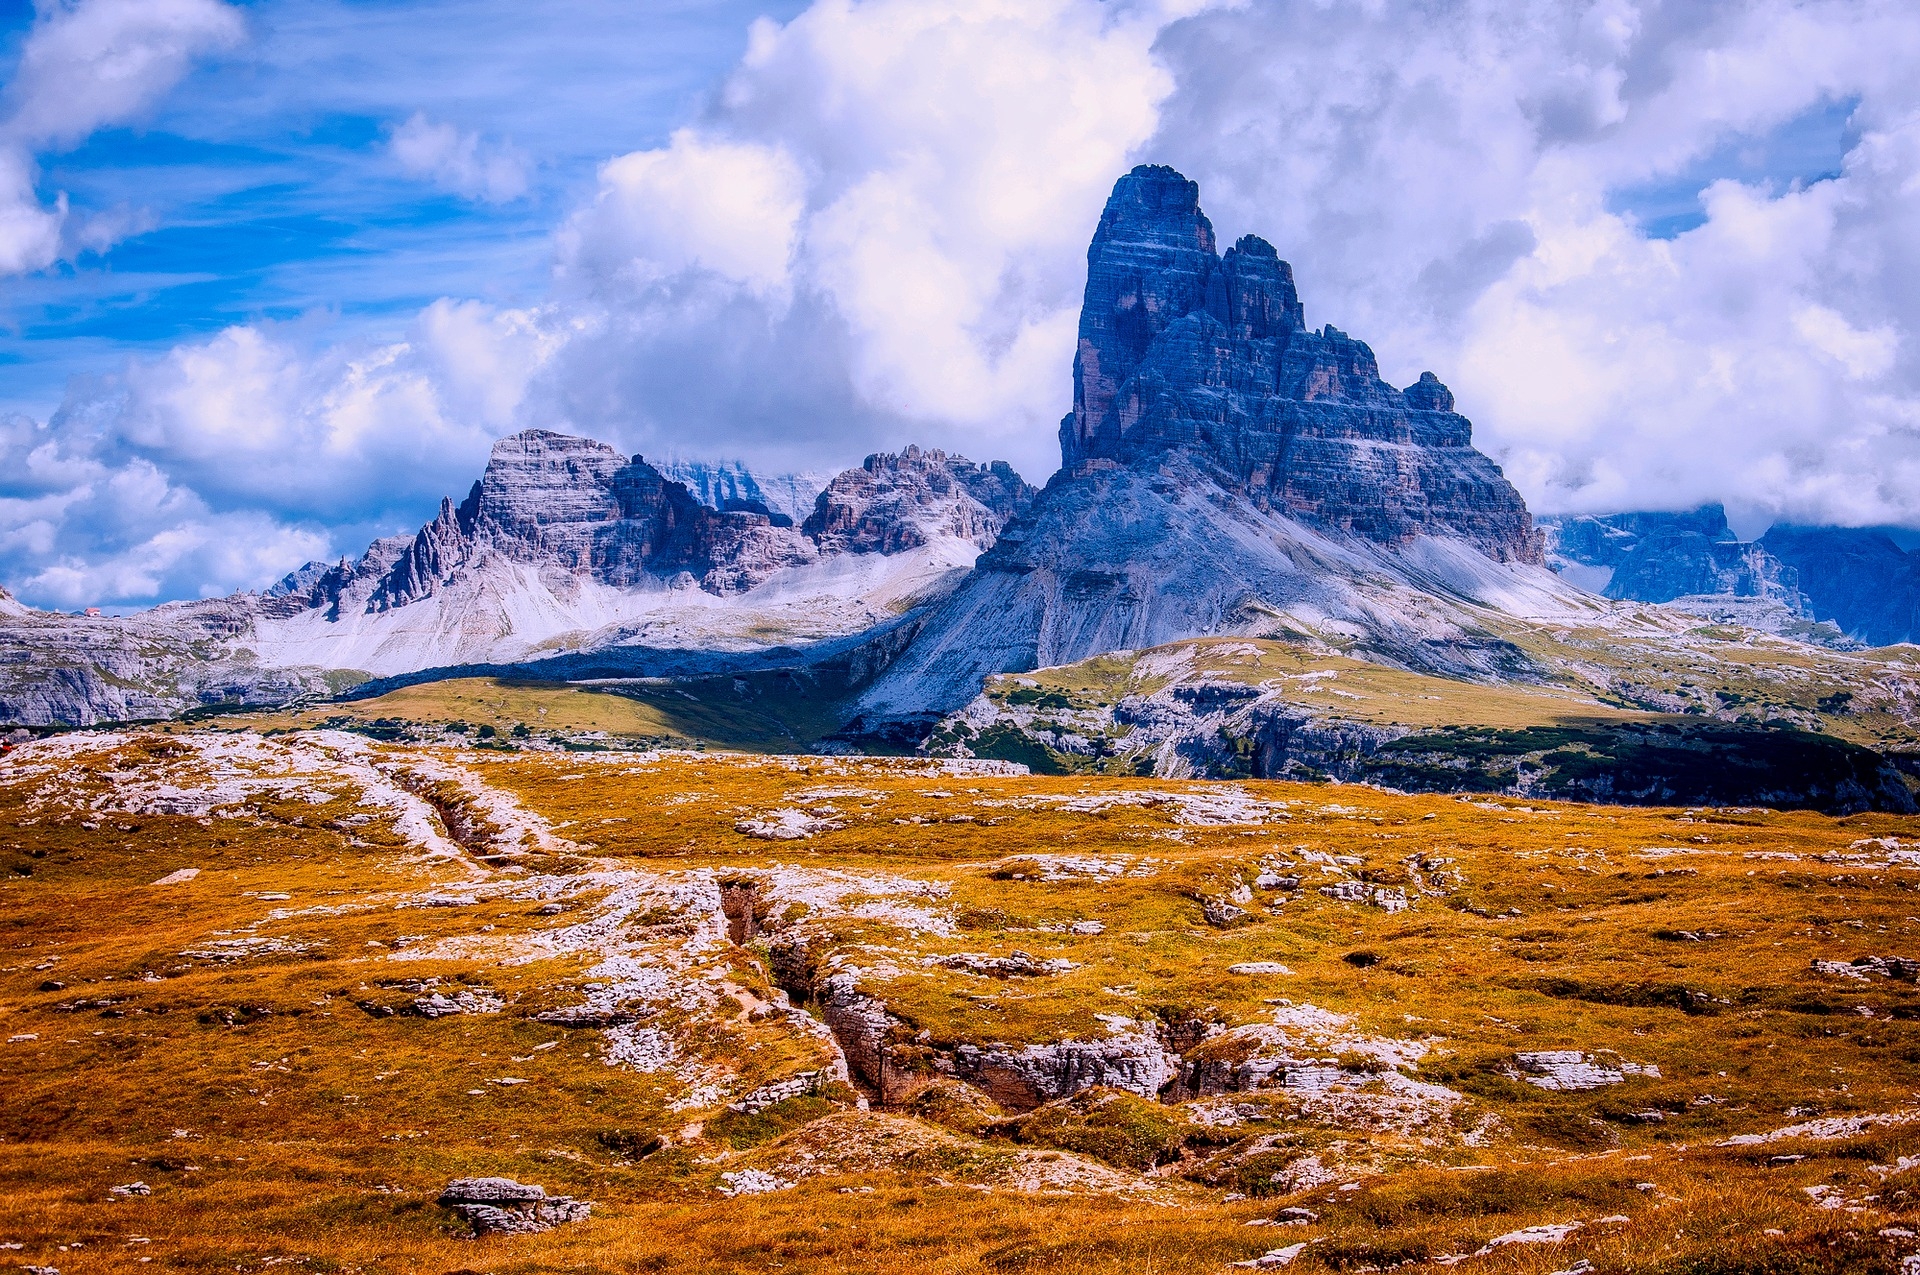 https://pixabay.com/en/italy-dolomites-mountains-meadow-2315452/